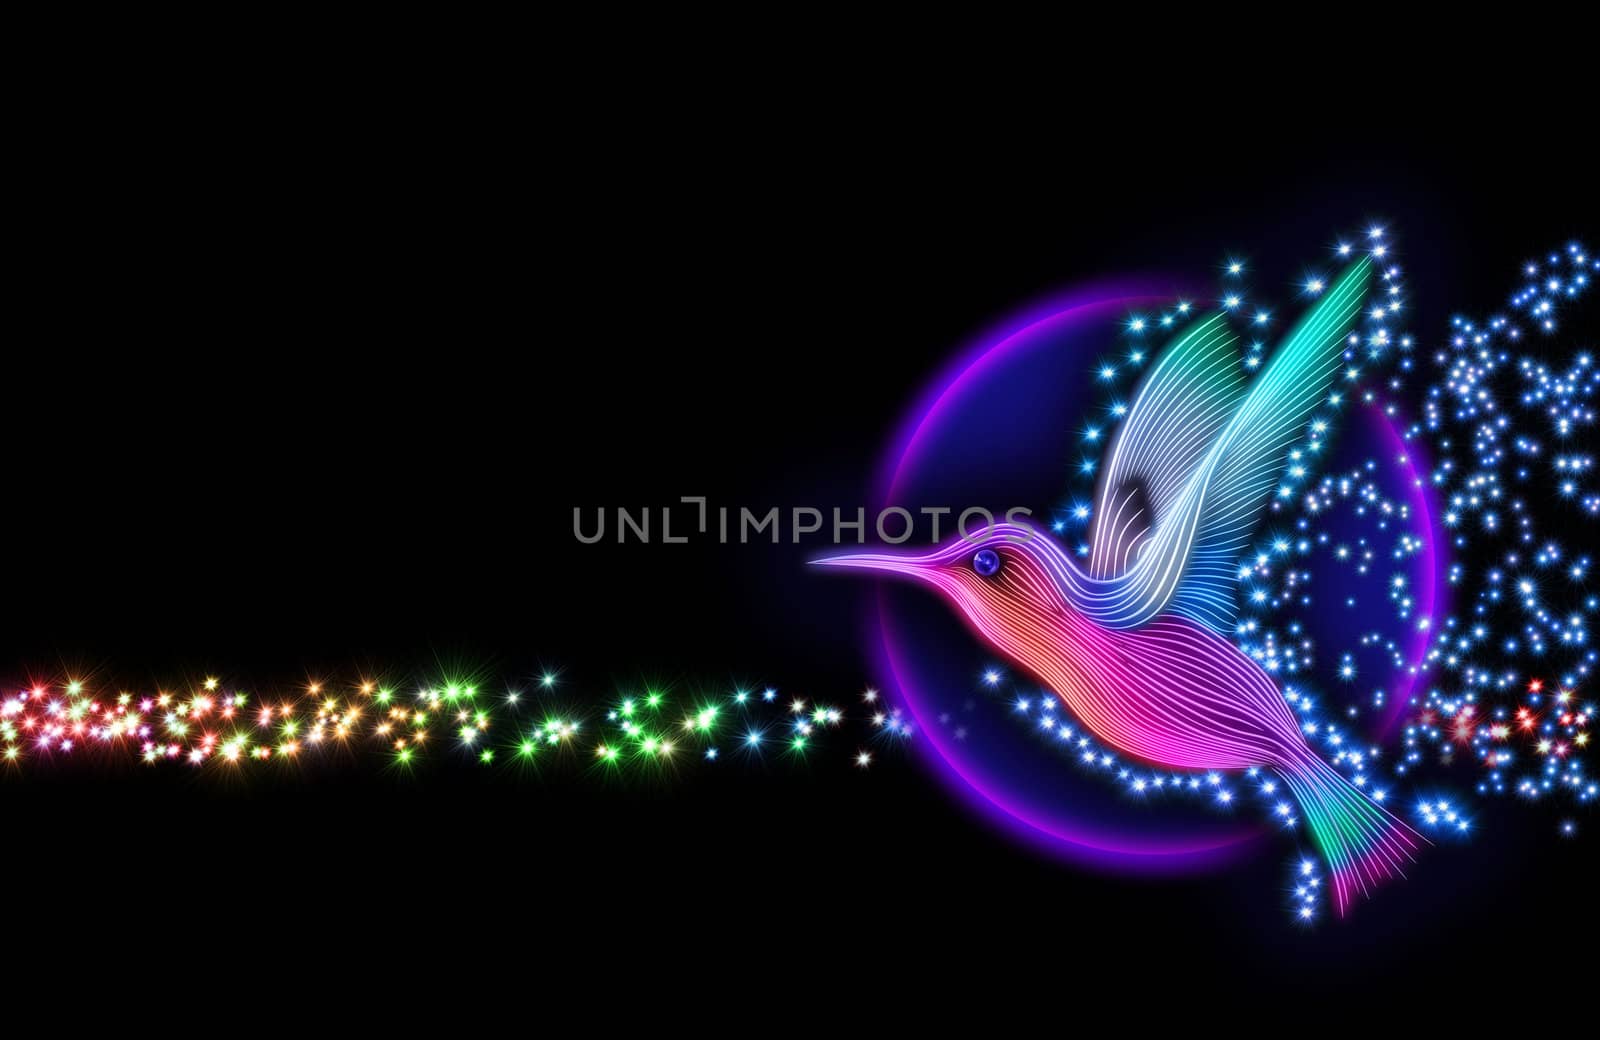 3d render of colibri bird - hummingbird striped silhouette with stars